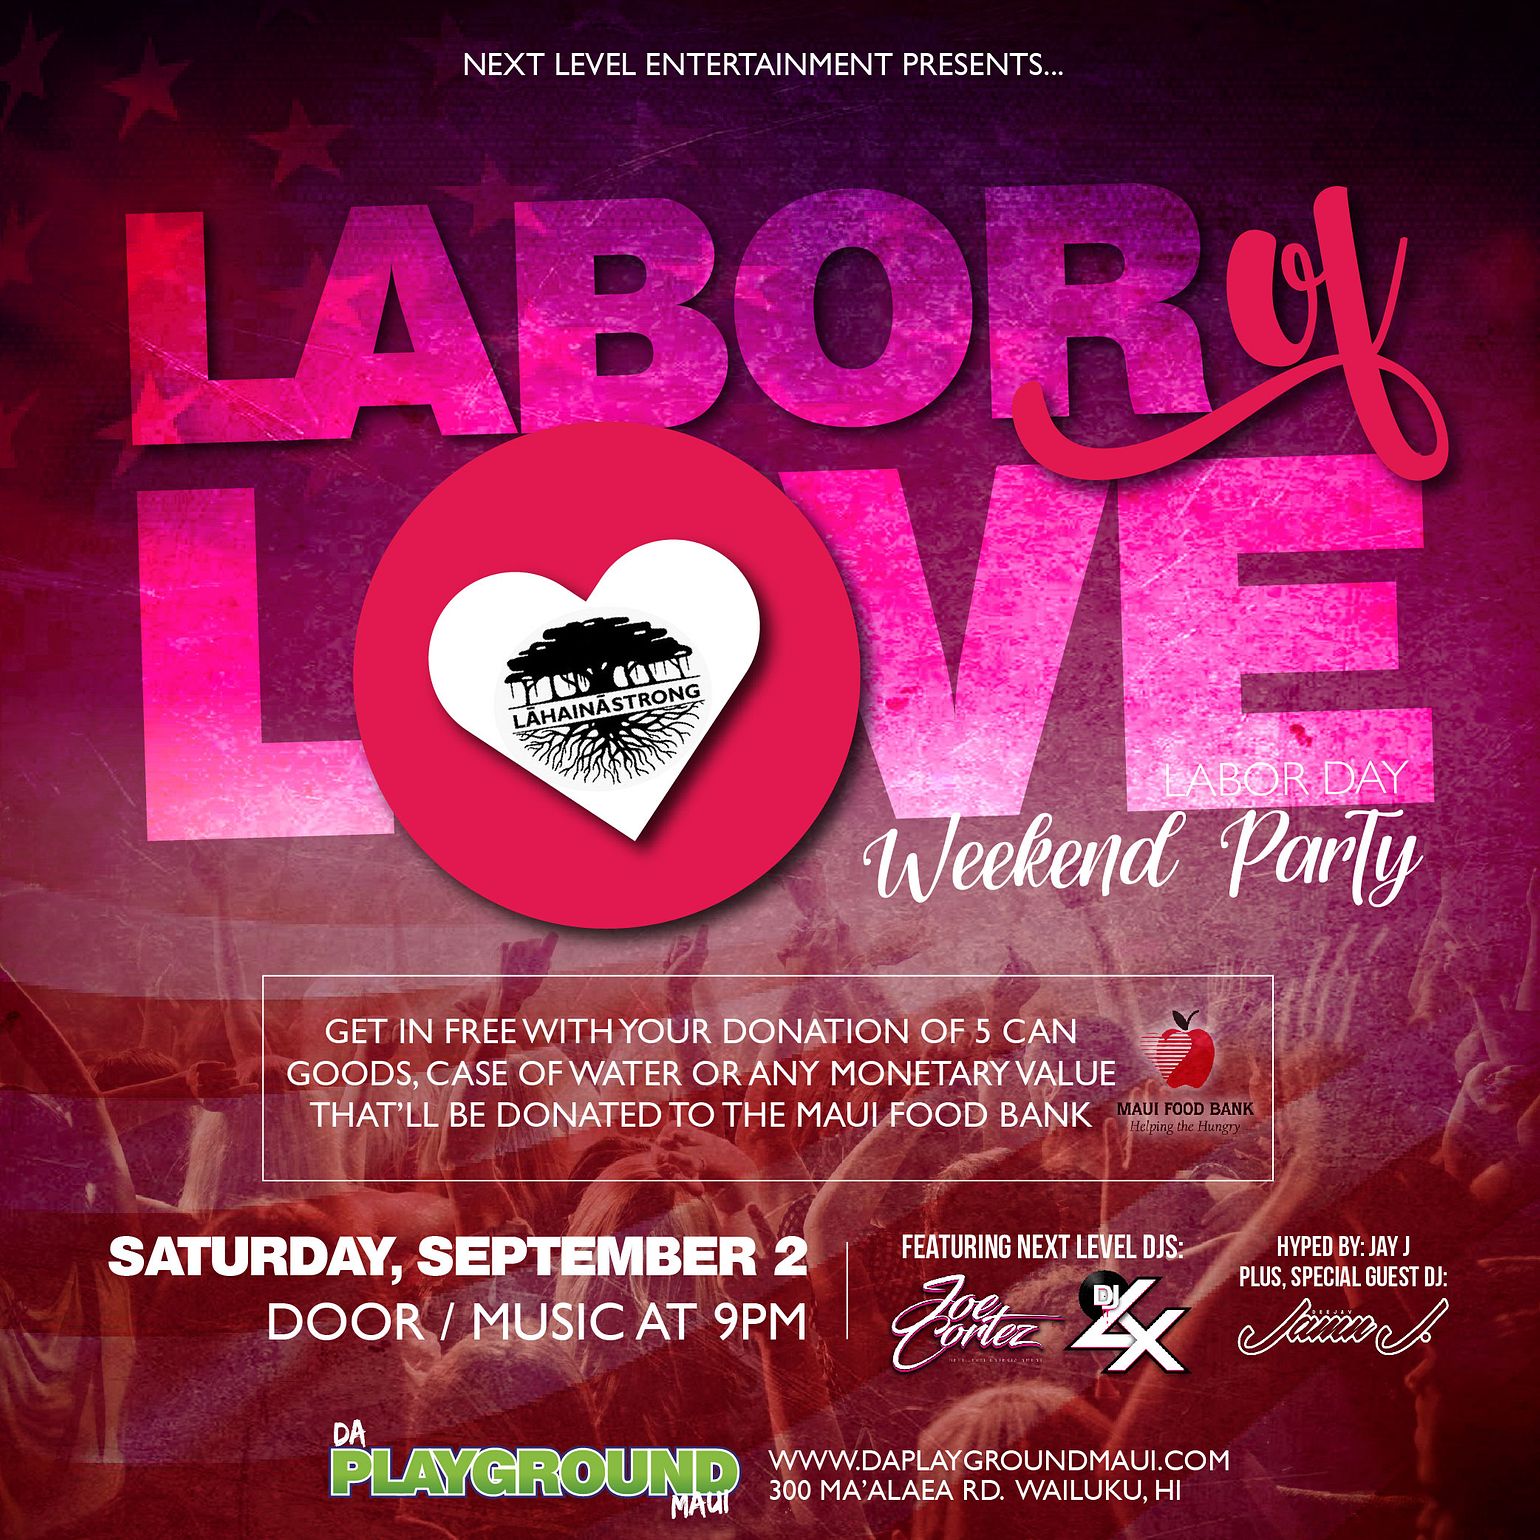 Labor Of Love Labor Day Weekend Party Tickets At Da Playground Maui In Wailuku By Da